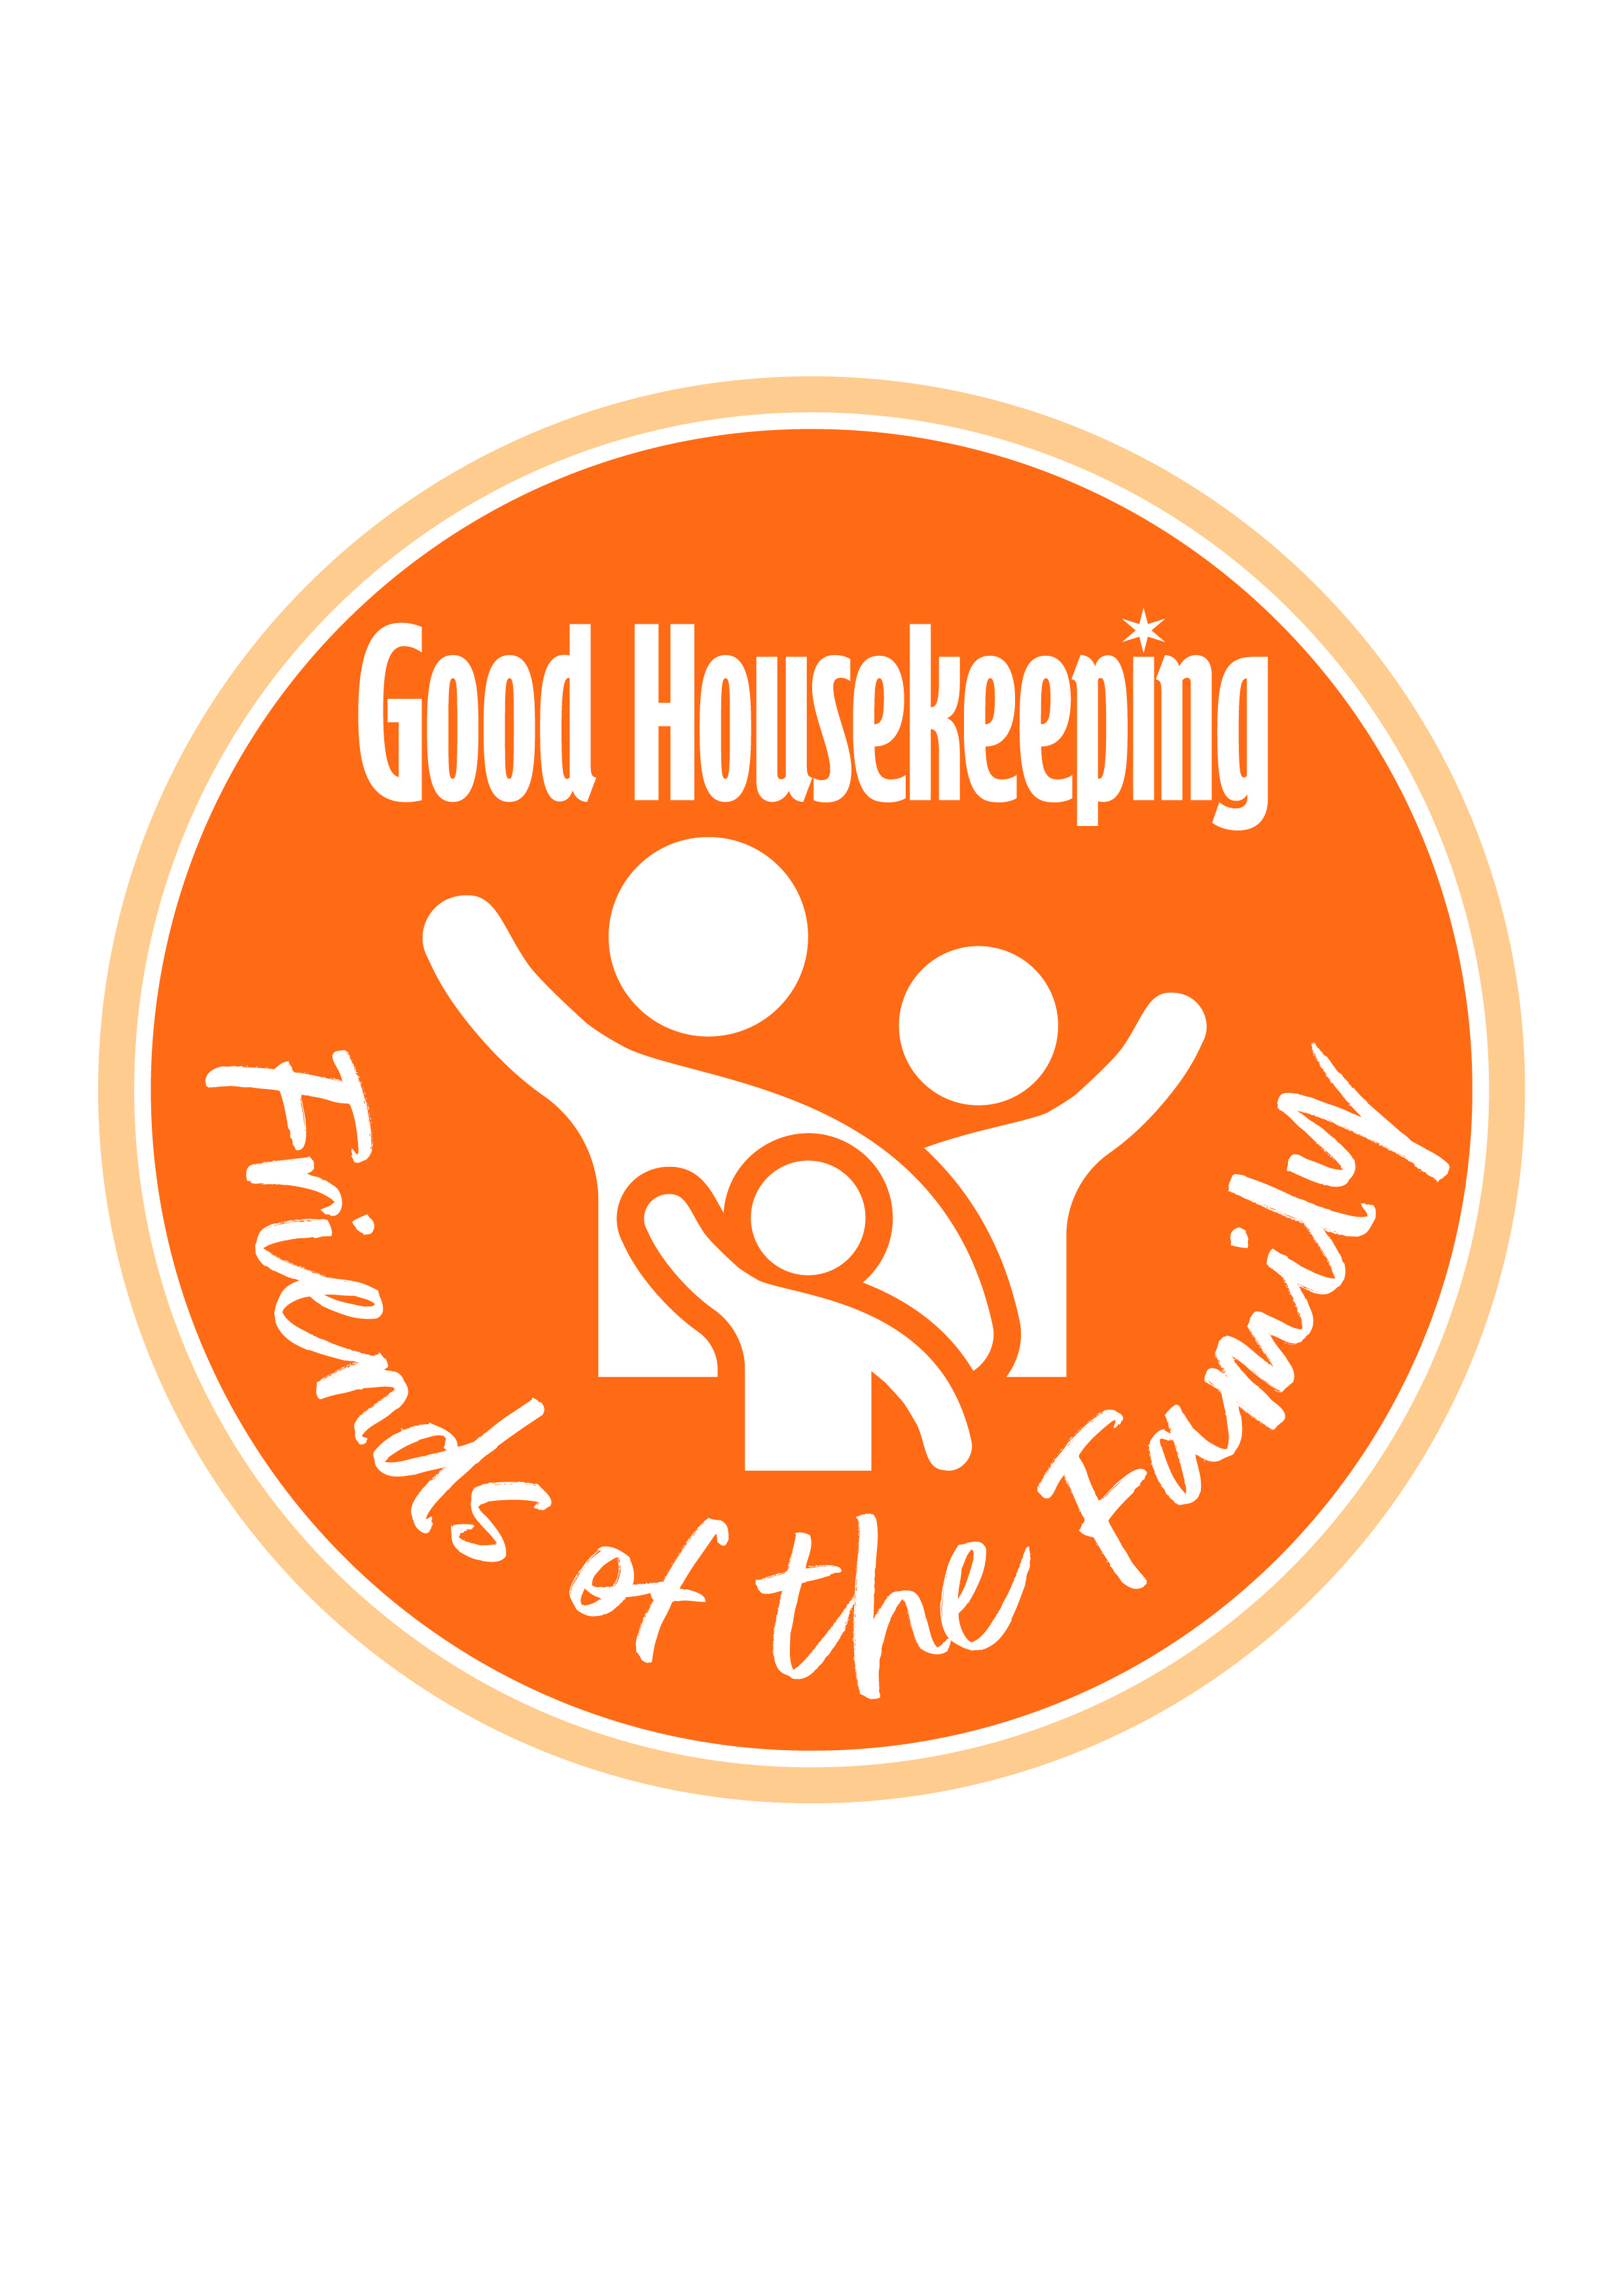 Good Housekeeping UK celebrates its centenary year - FIPP